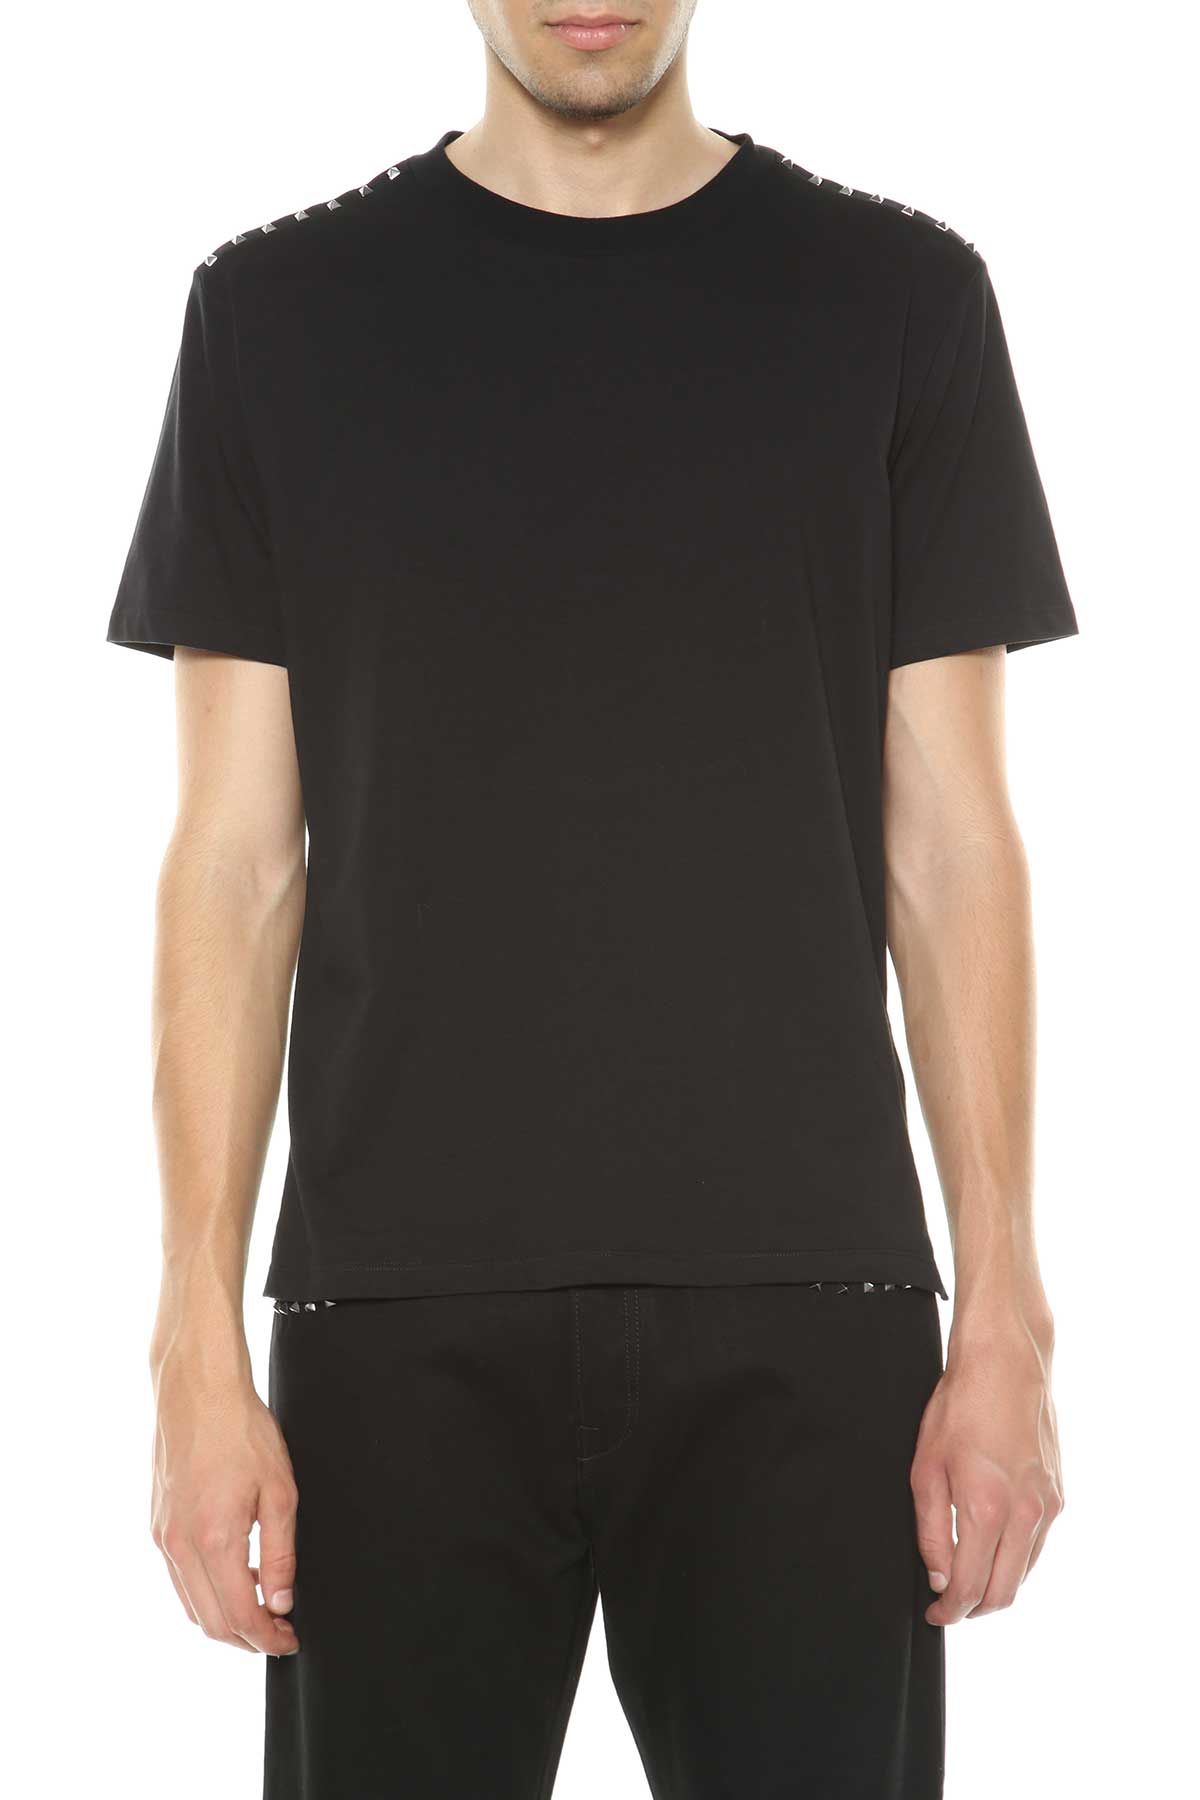 Valentino - Valentino T-shirt With Studs - Nero, Men's Short Sleeve T ...